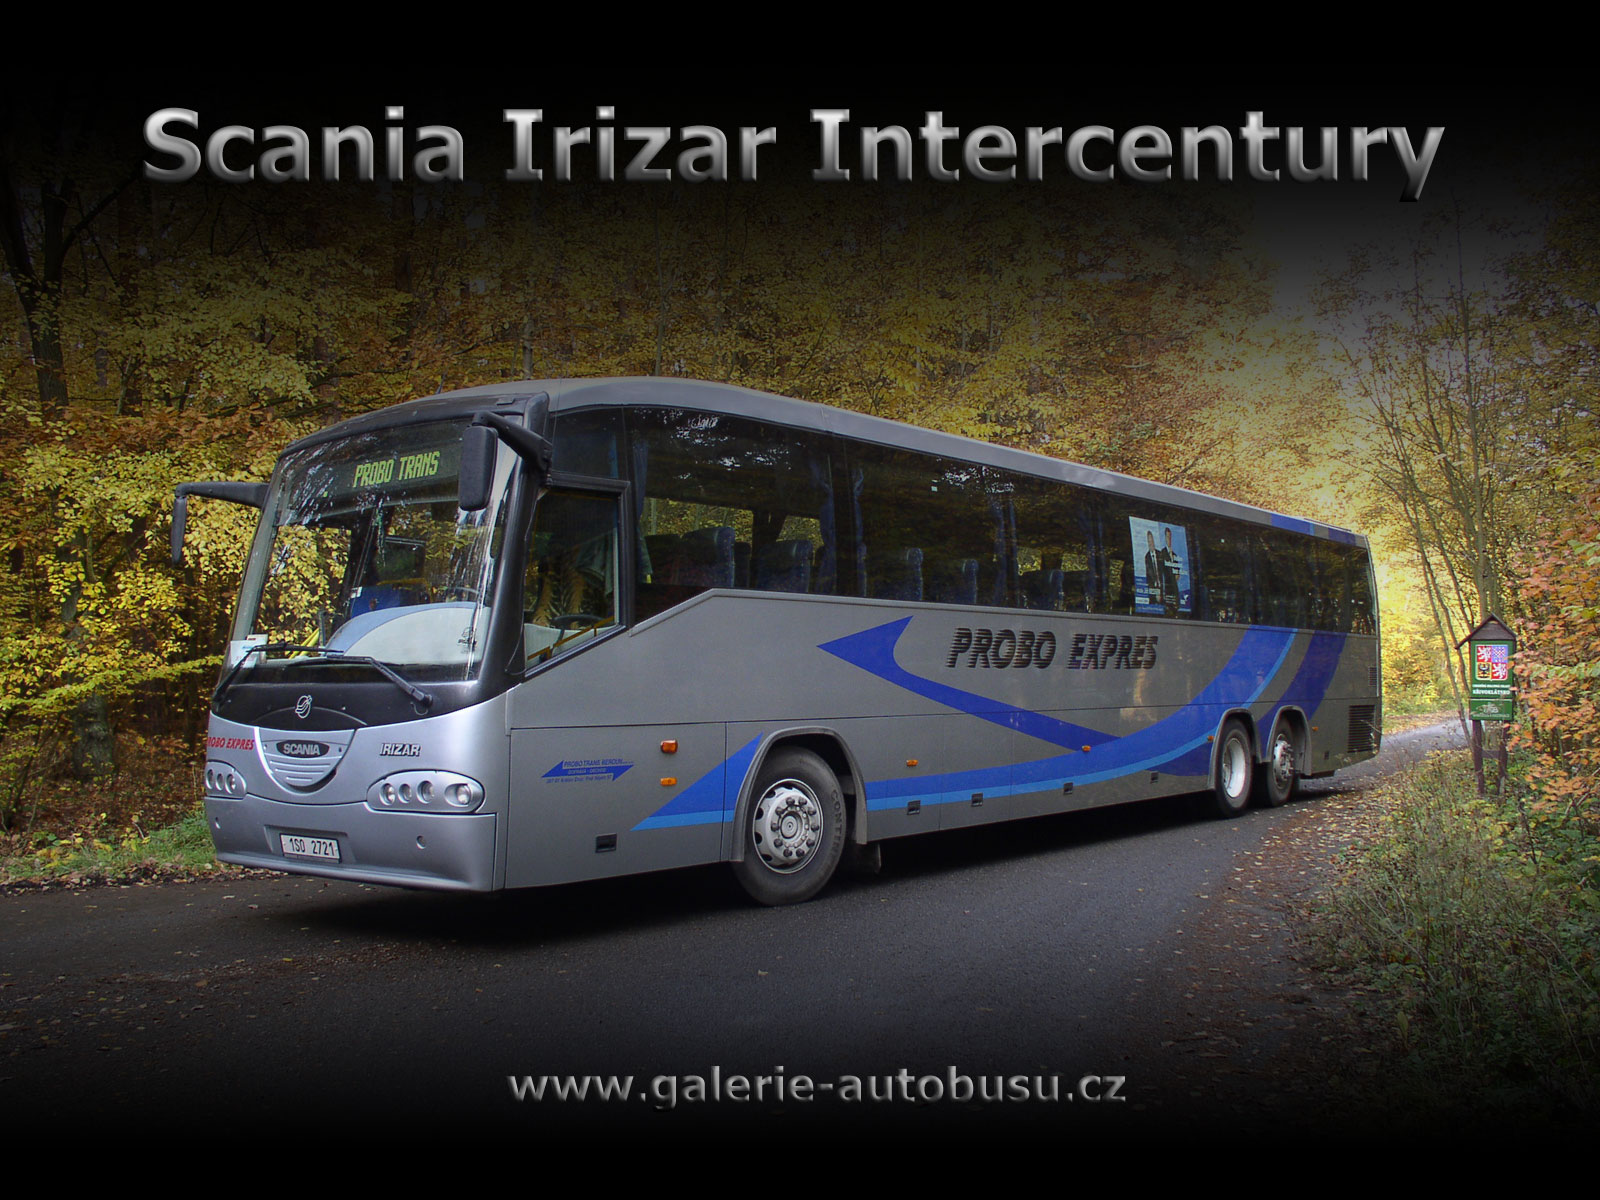 Intercentenaire de Scania Irizar